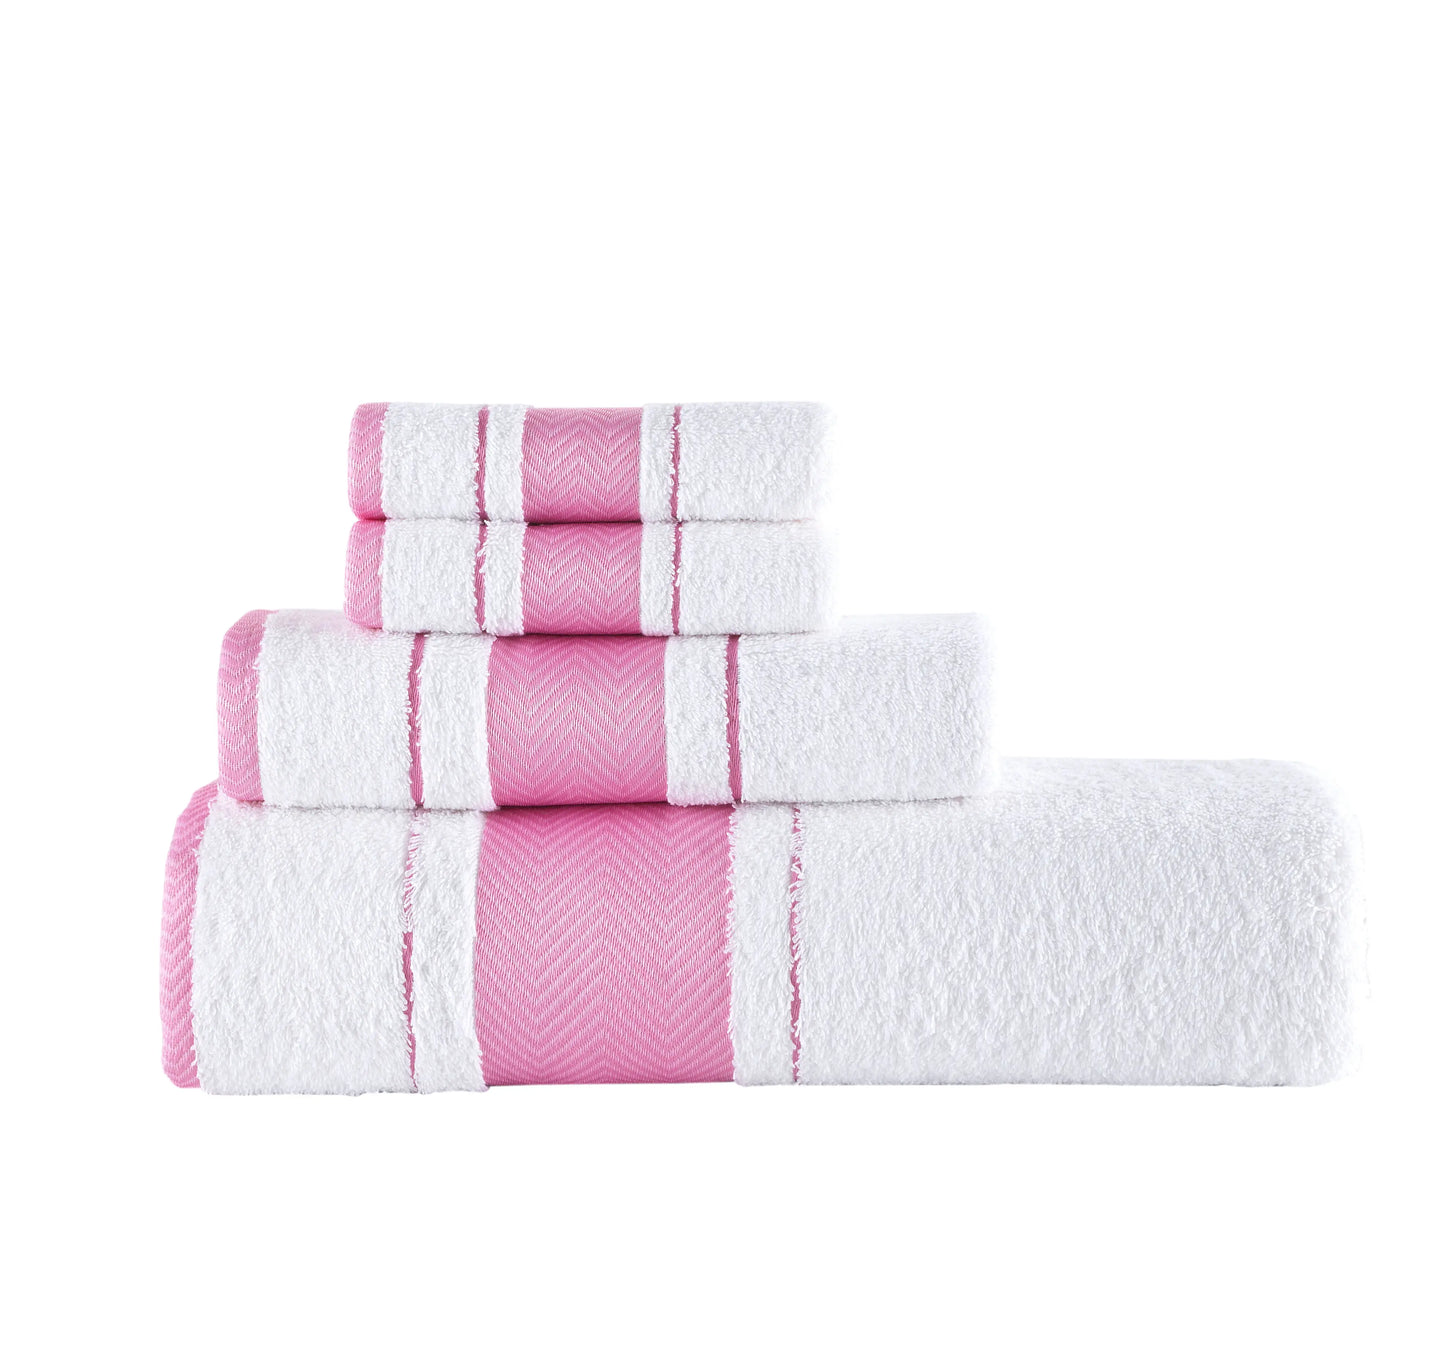 XXL Fishbone Bath Towel/Sheet Set of 4 - 100% Turkish Cotton